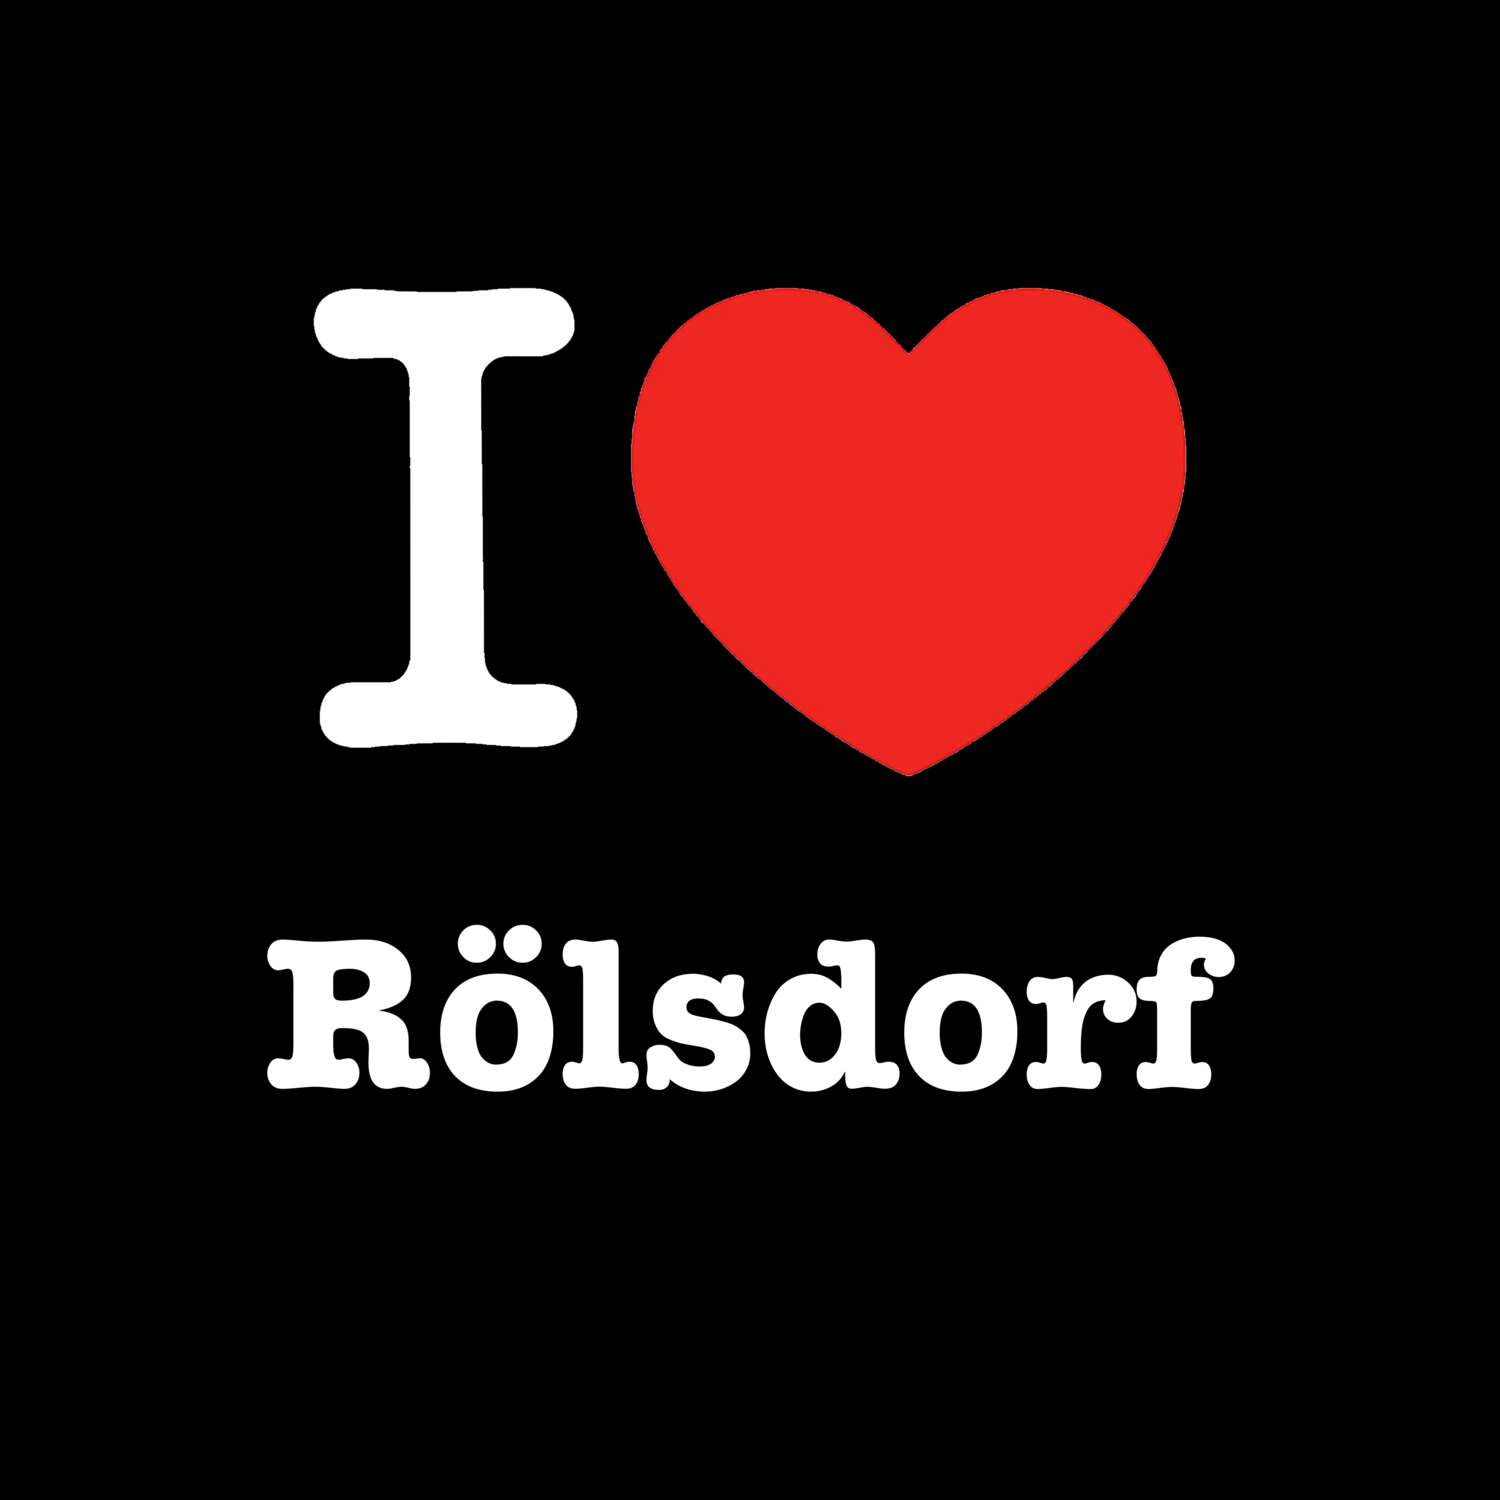 Rölsdorf T-Shirt »I love«